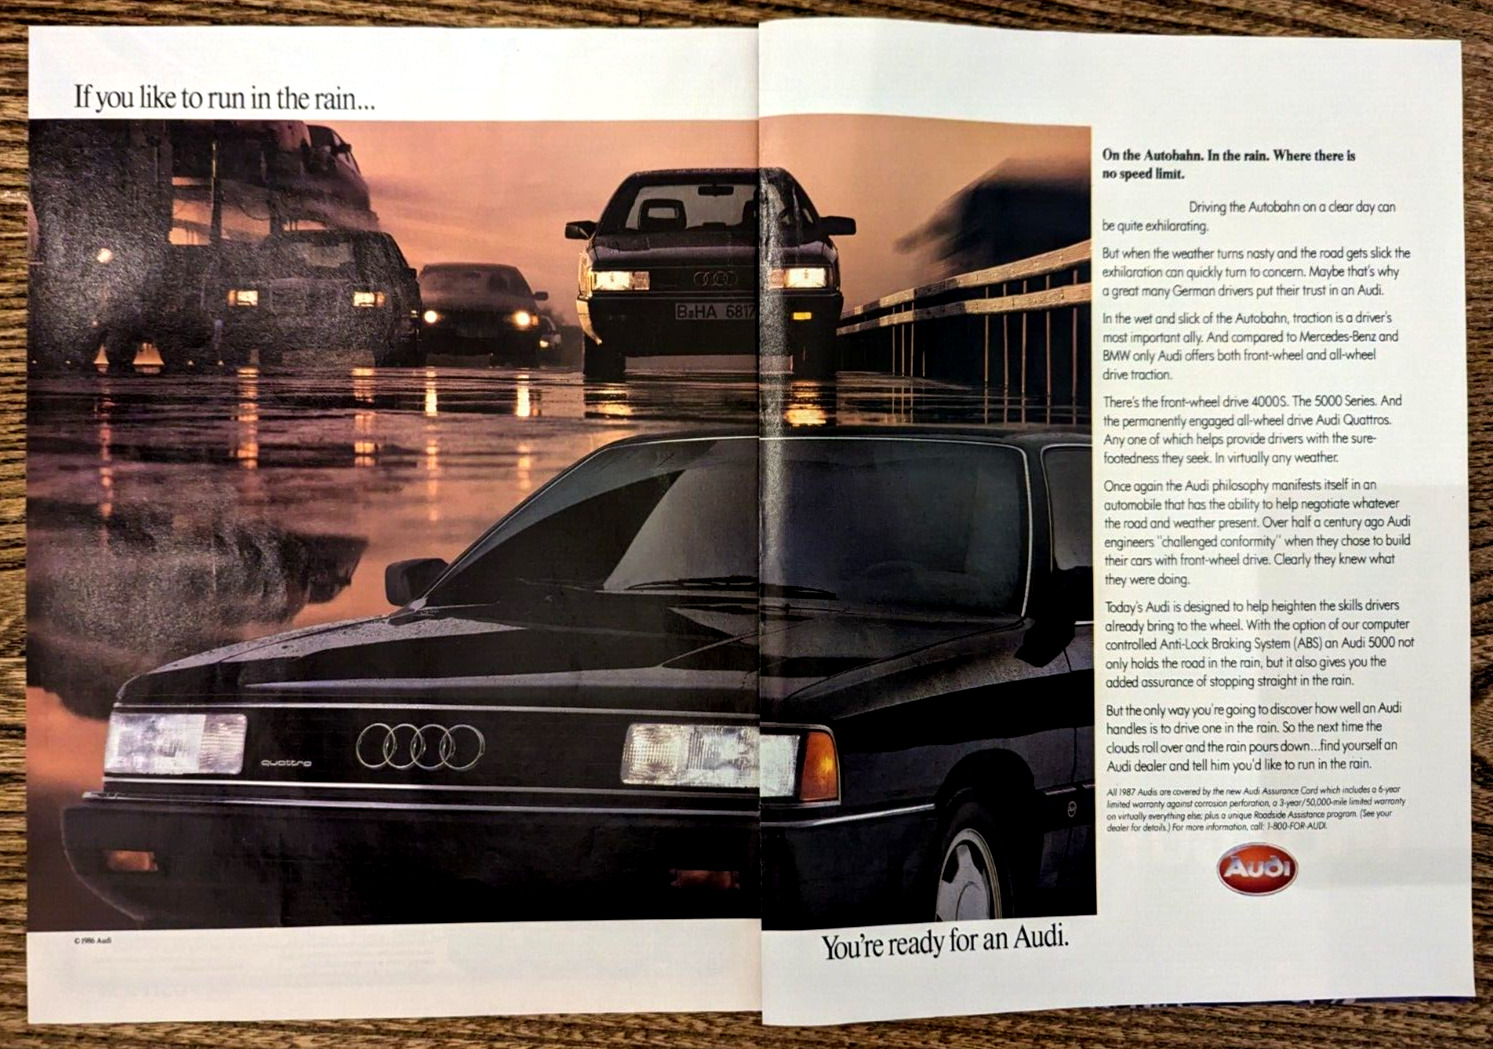 1987 Audi 5000 Series Autobahn in the Rain AWD Photo 2pg Original Color Print Ad